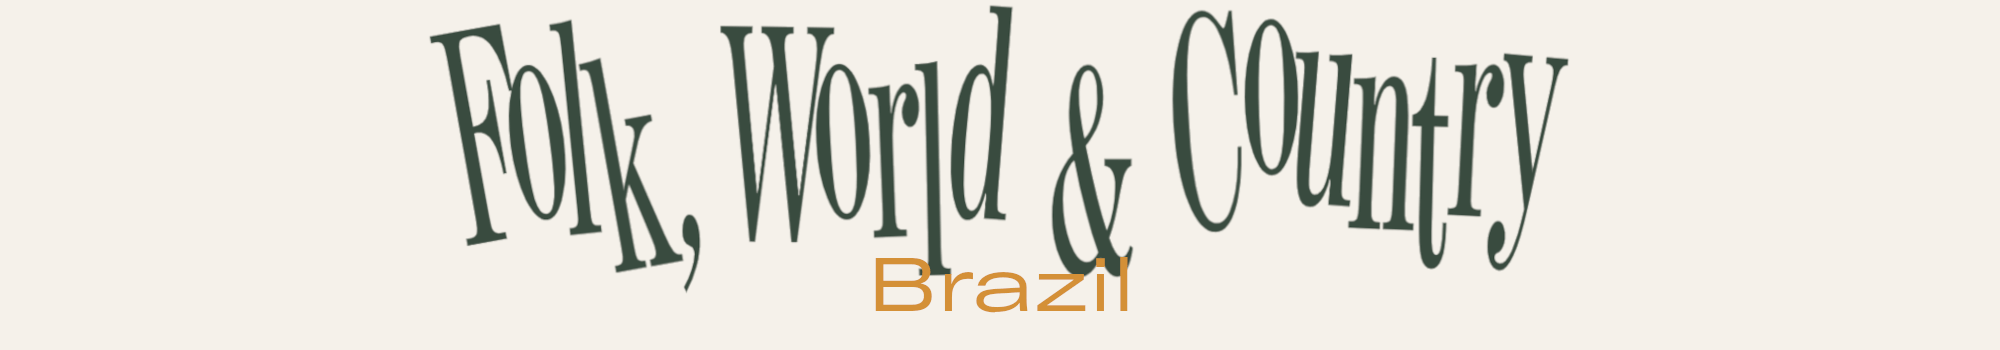 Rubrik till kategori: Folk, World Country - Brazil